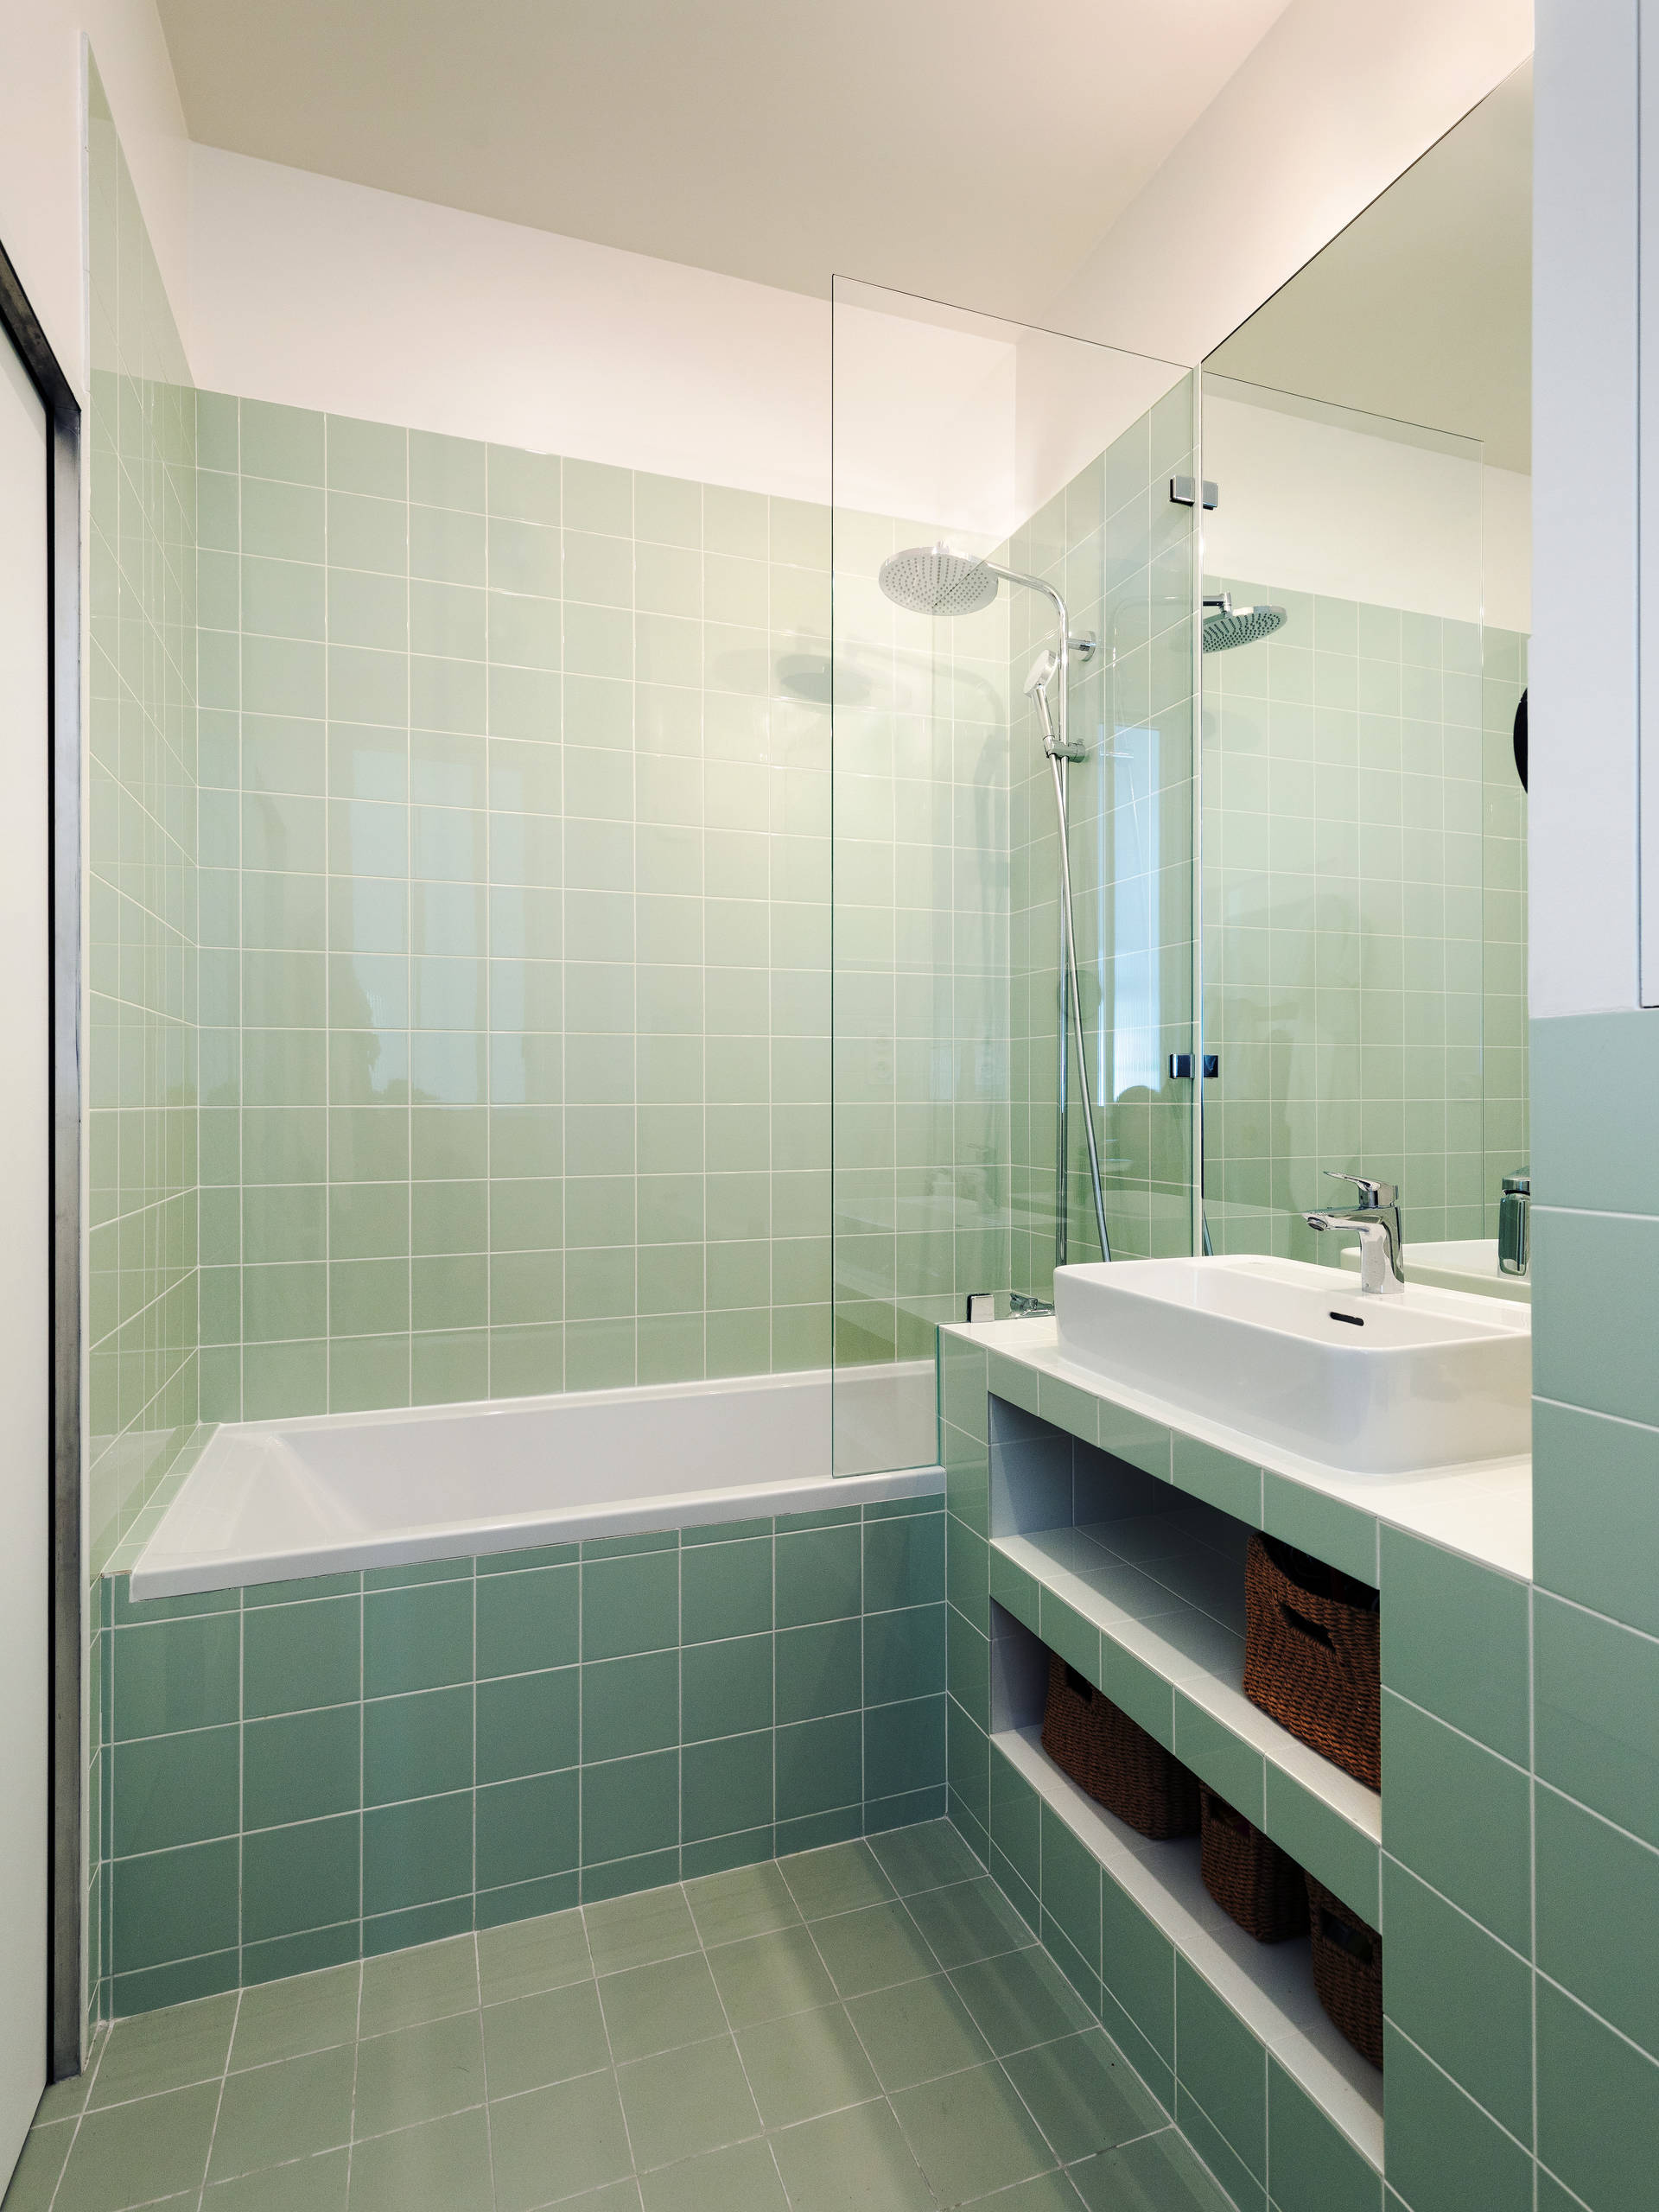 Bathroom With Tile Countertops Pictures, Tile Bathroom Countertops